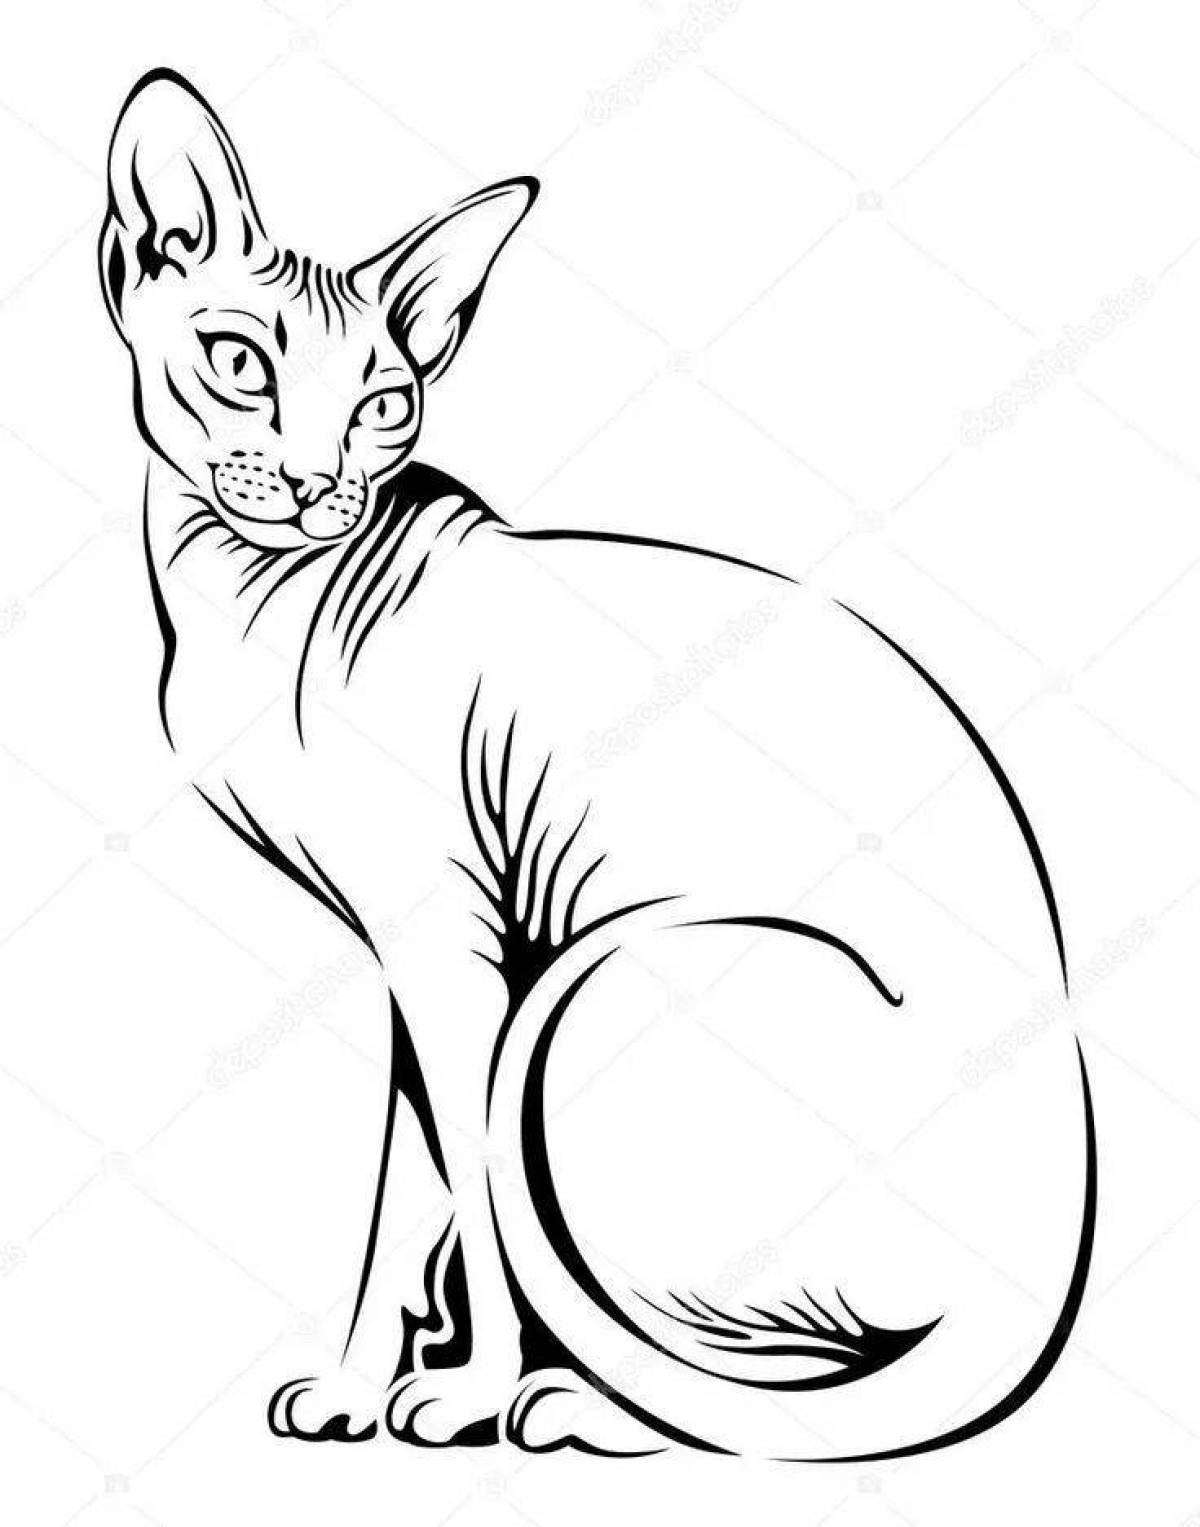 Coloring page elegant sphinx cat